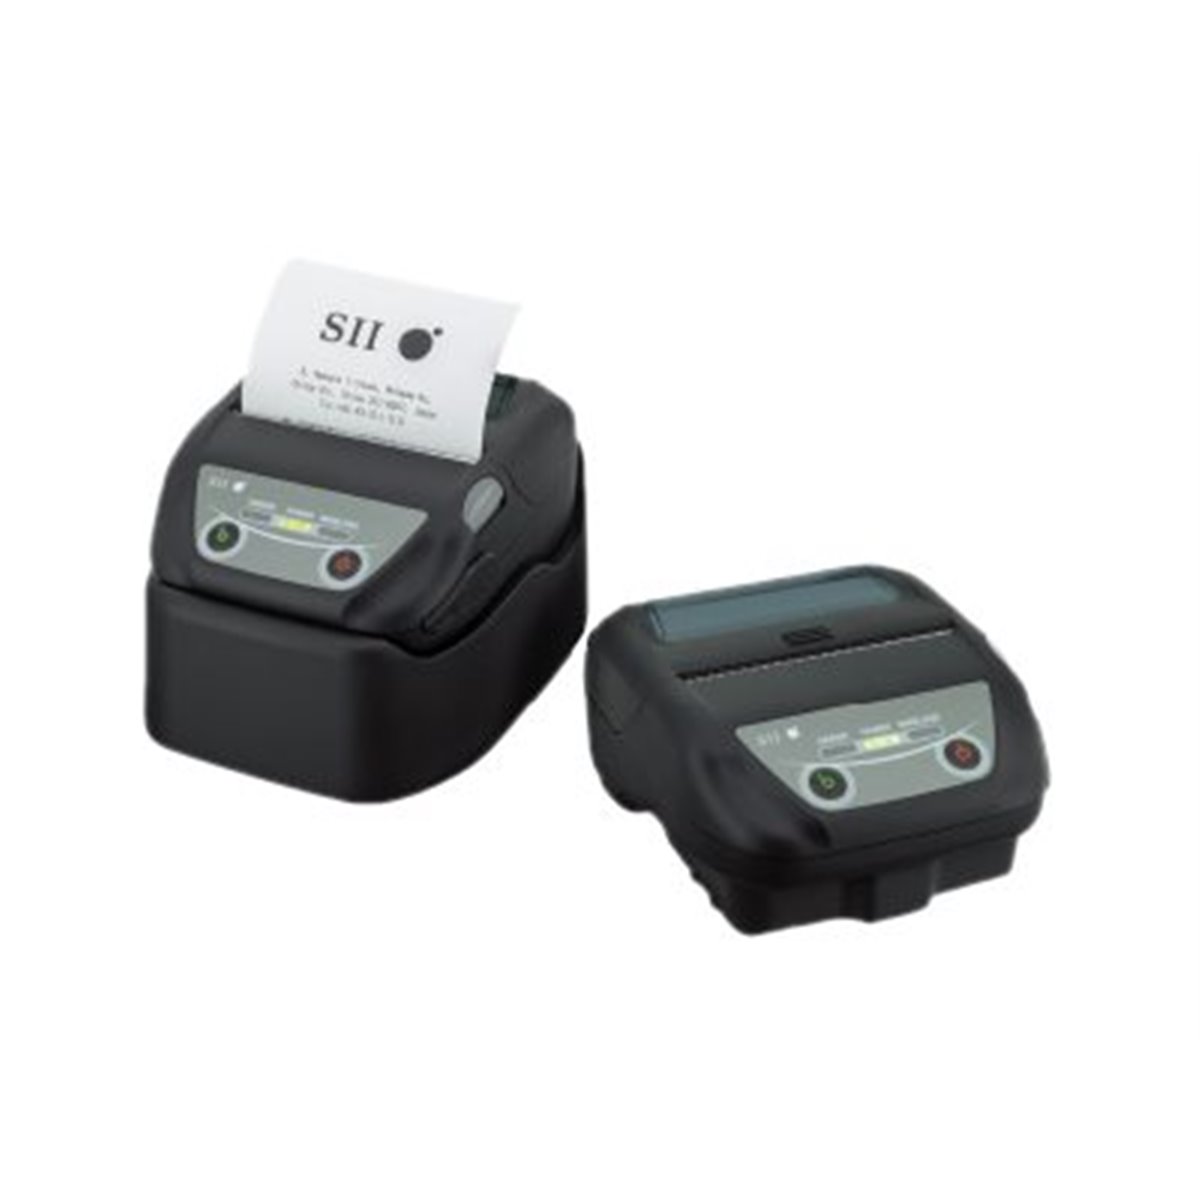 Seiko Instruments Seiko MP-B30 mobile Printer 3 Bluetooth USB 127mm-S - POS printer - Label Printer